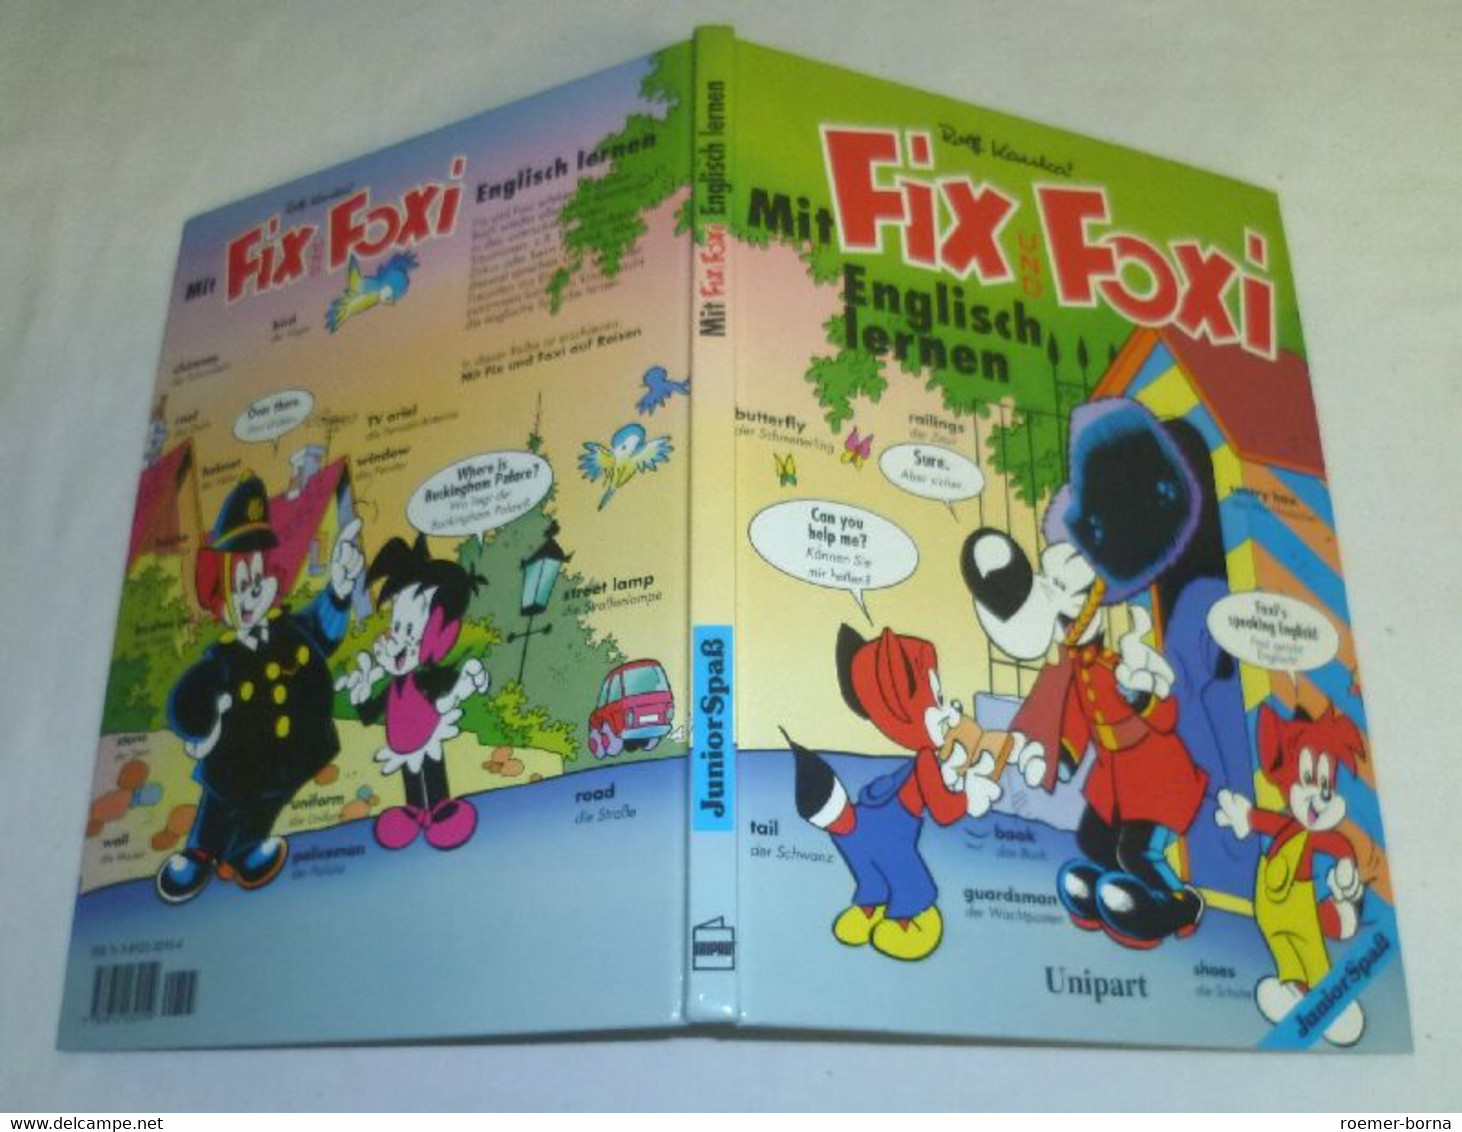 Mit Fix Und Foxi Englisch Lernen - Libros De Enseñanza